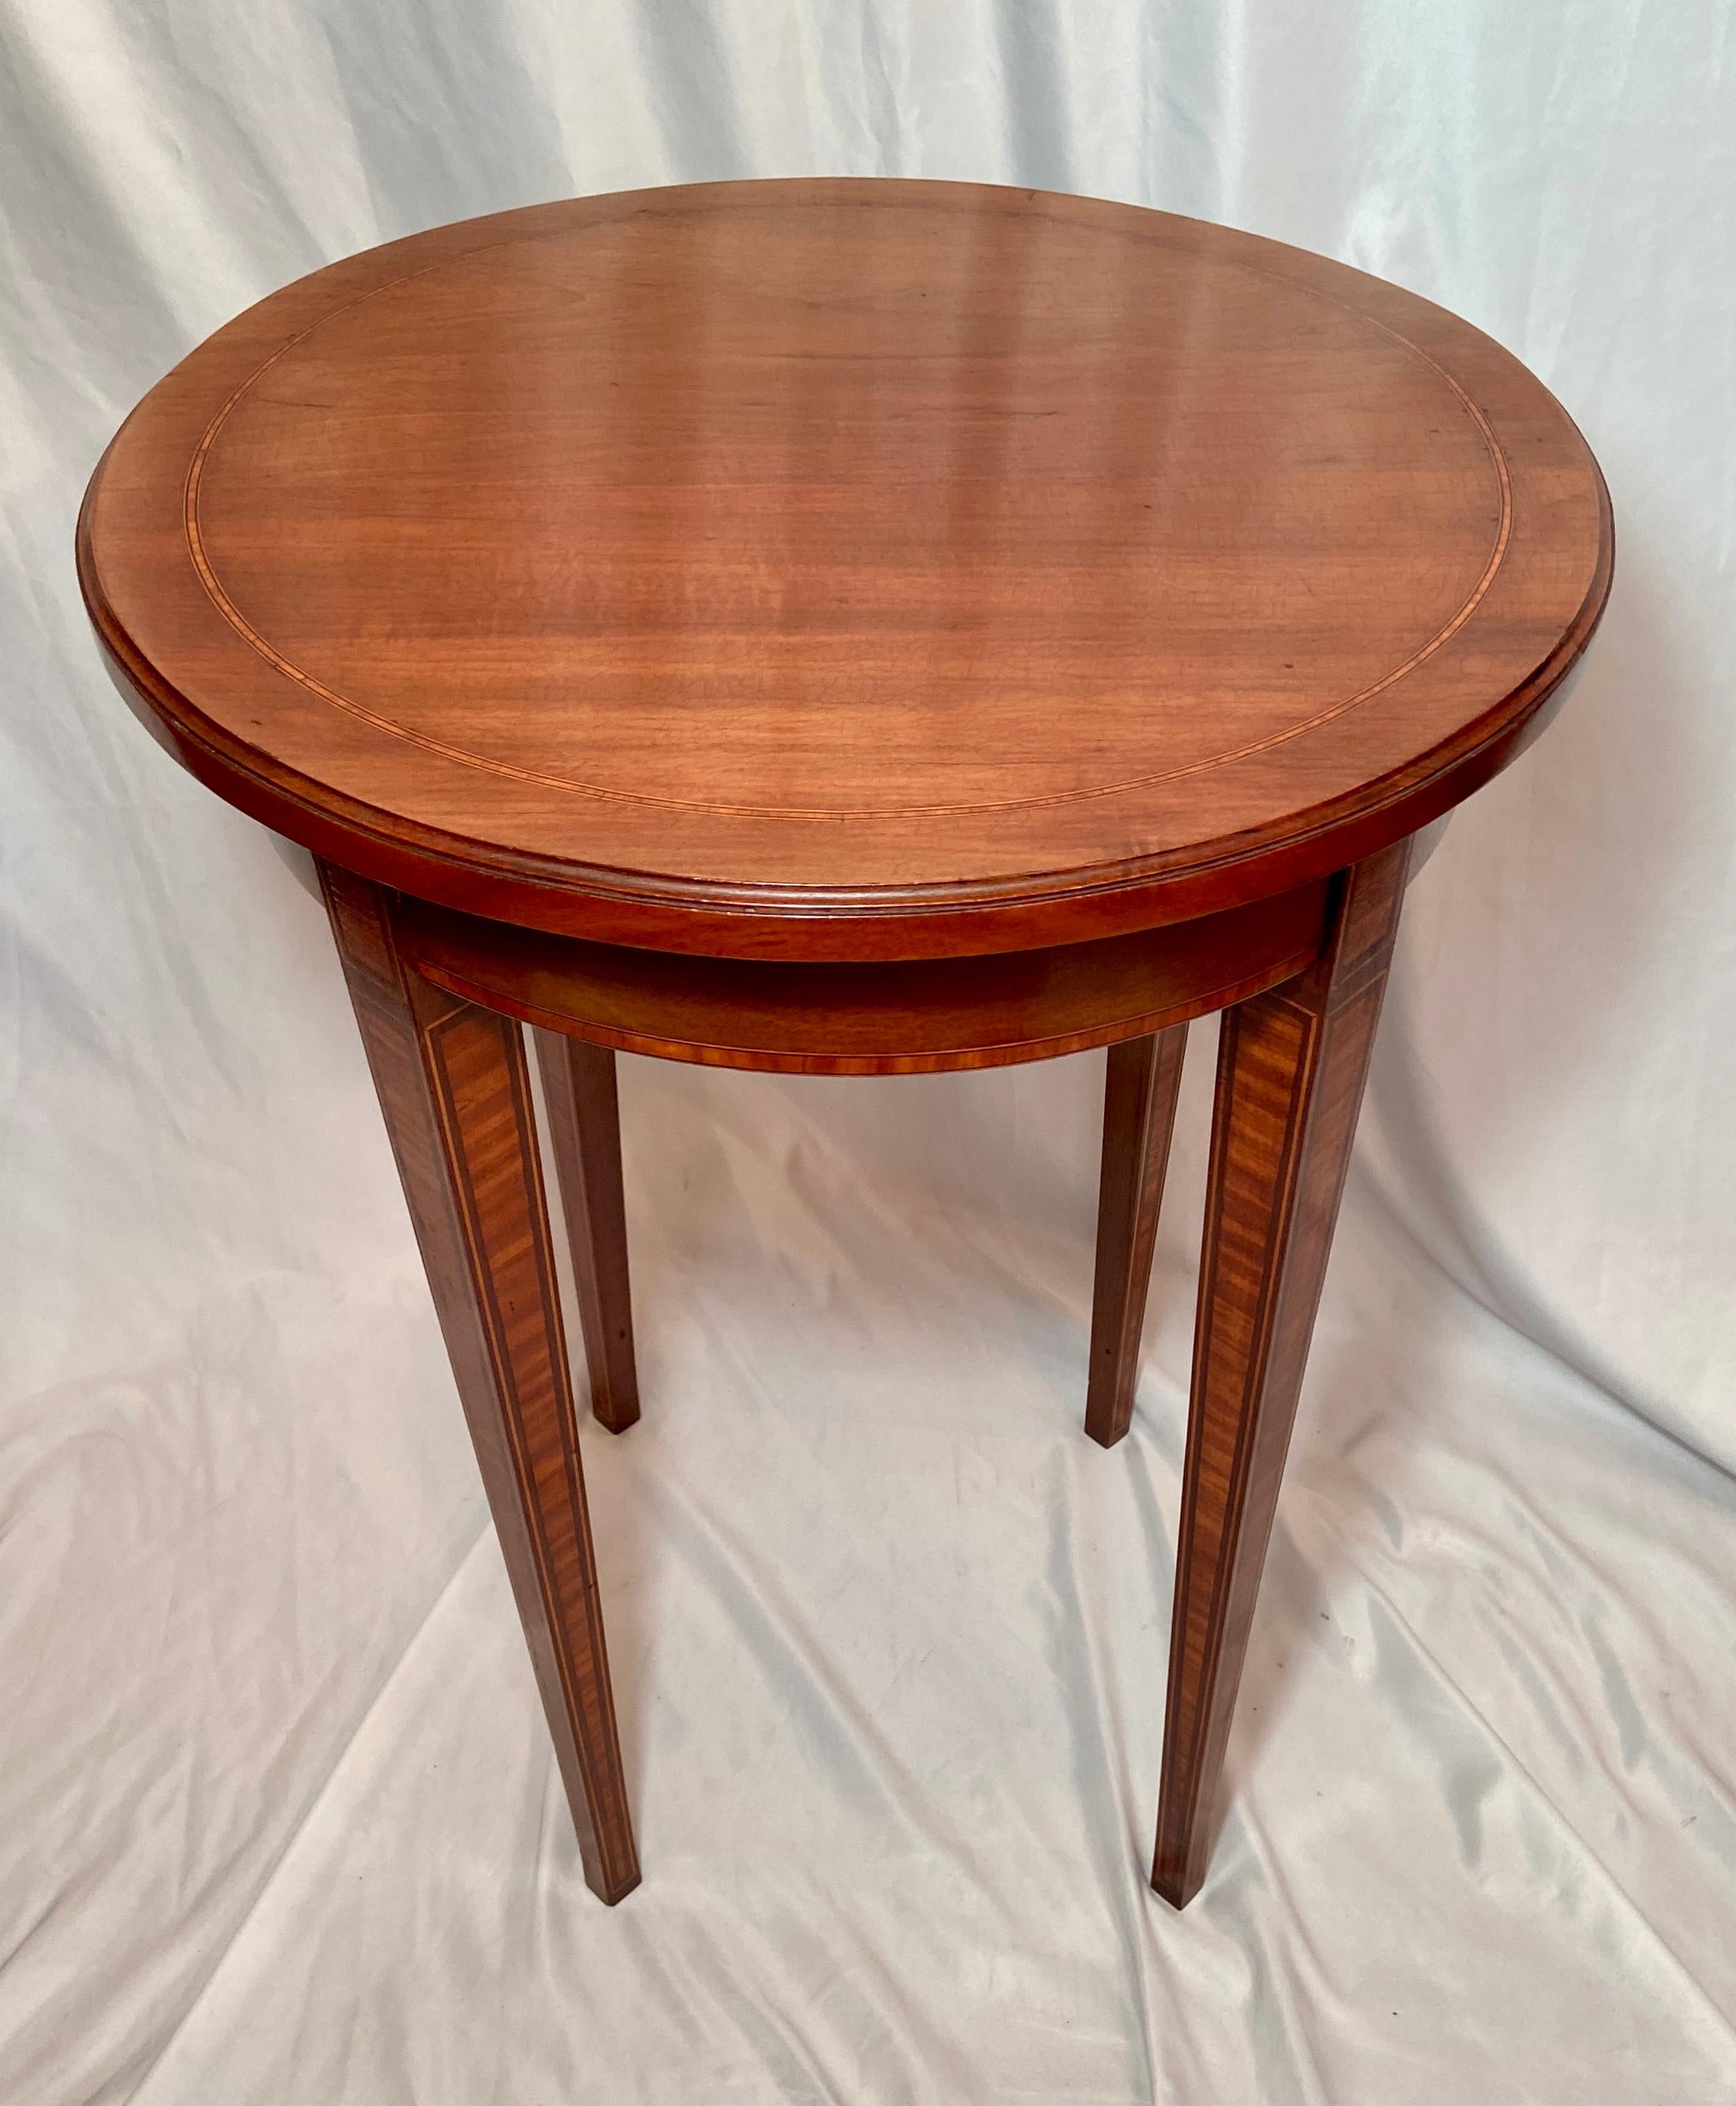 Antique English mahogany table with satinwood inlay, Circa 1880-1890.